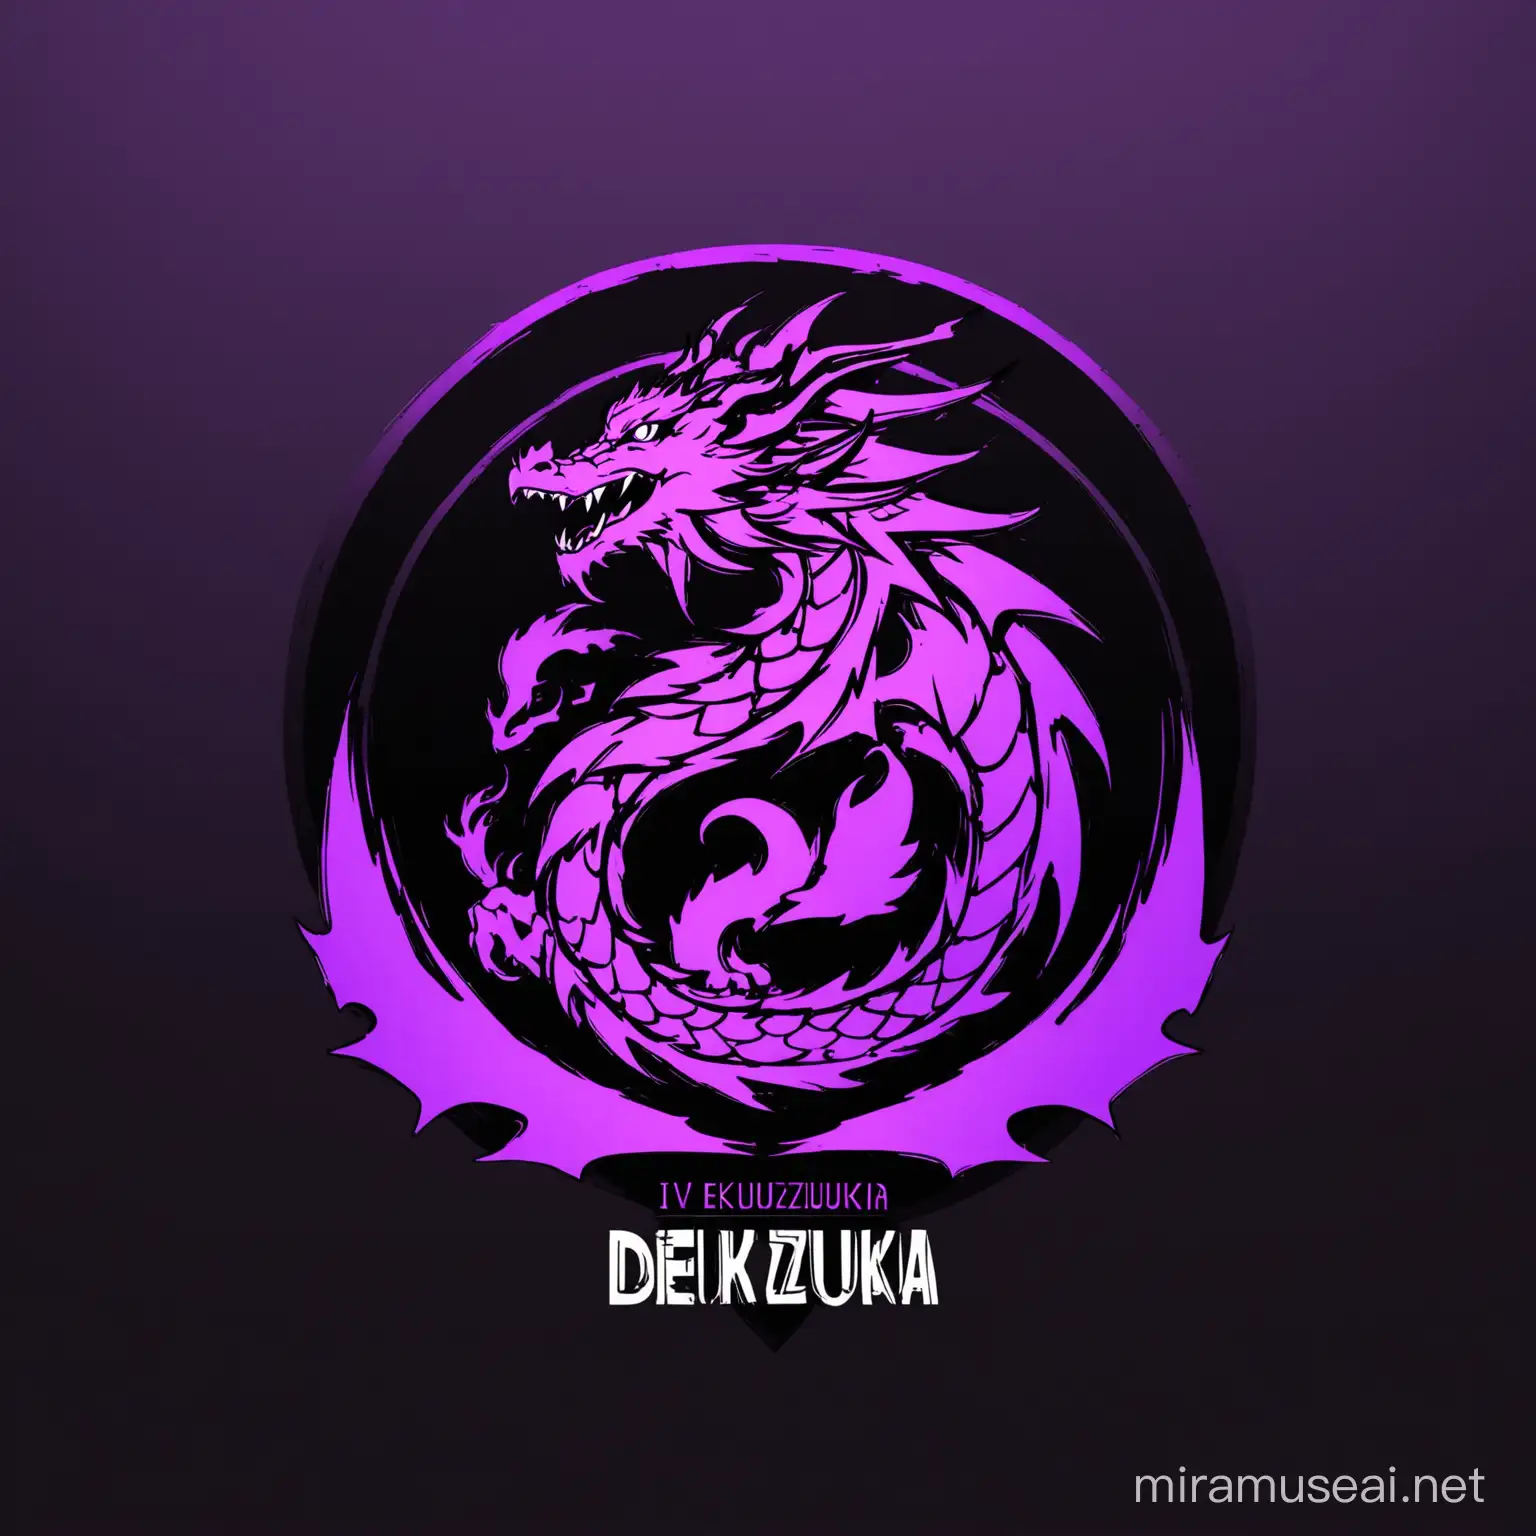 Dekuzuka in Capital as title, logo for yt dp with dragon, purple,black,minimal